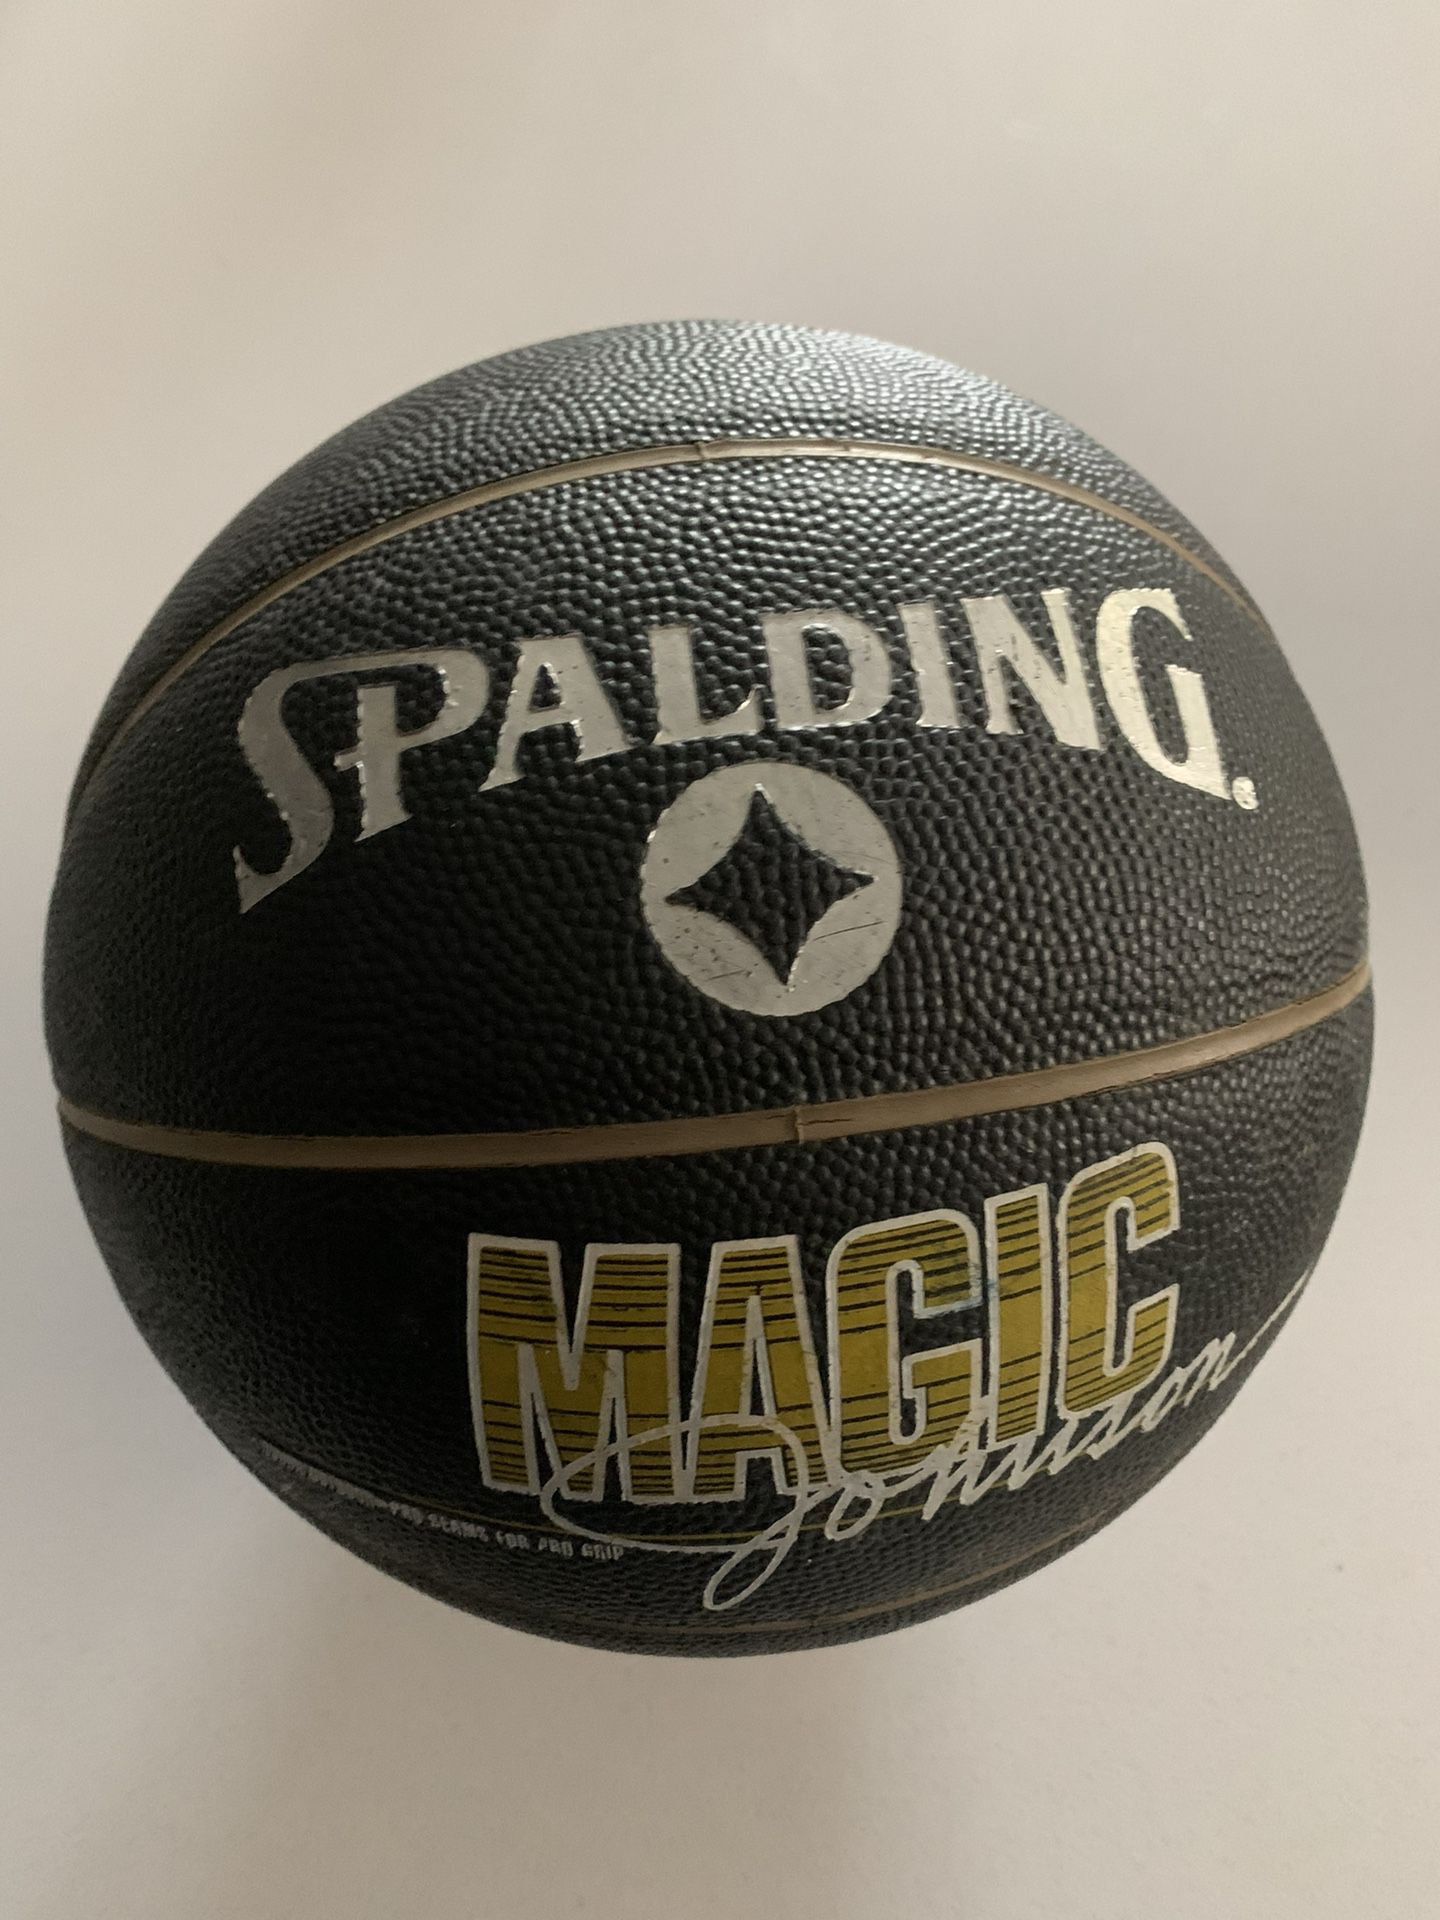 Magic Johnson Spalding Basketball Black 